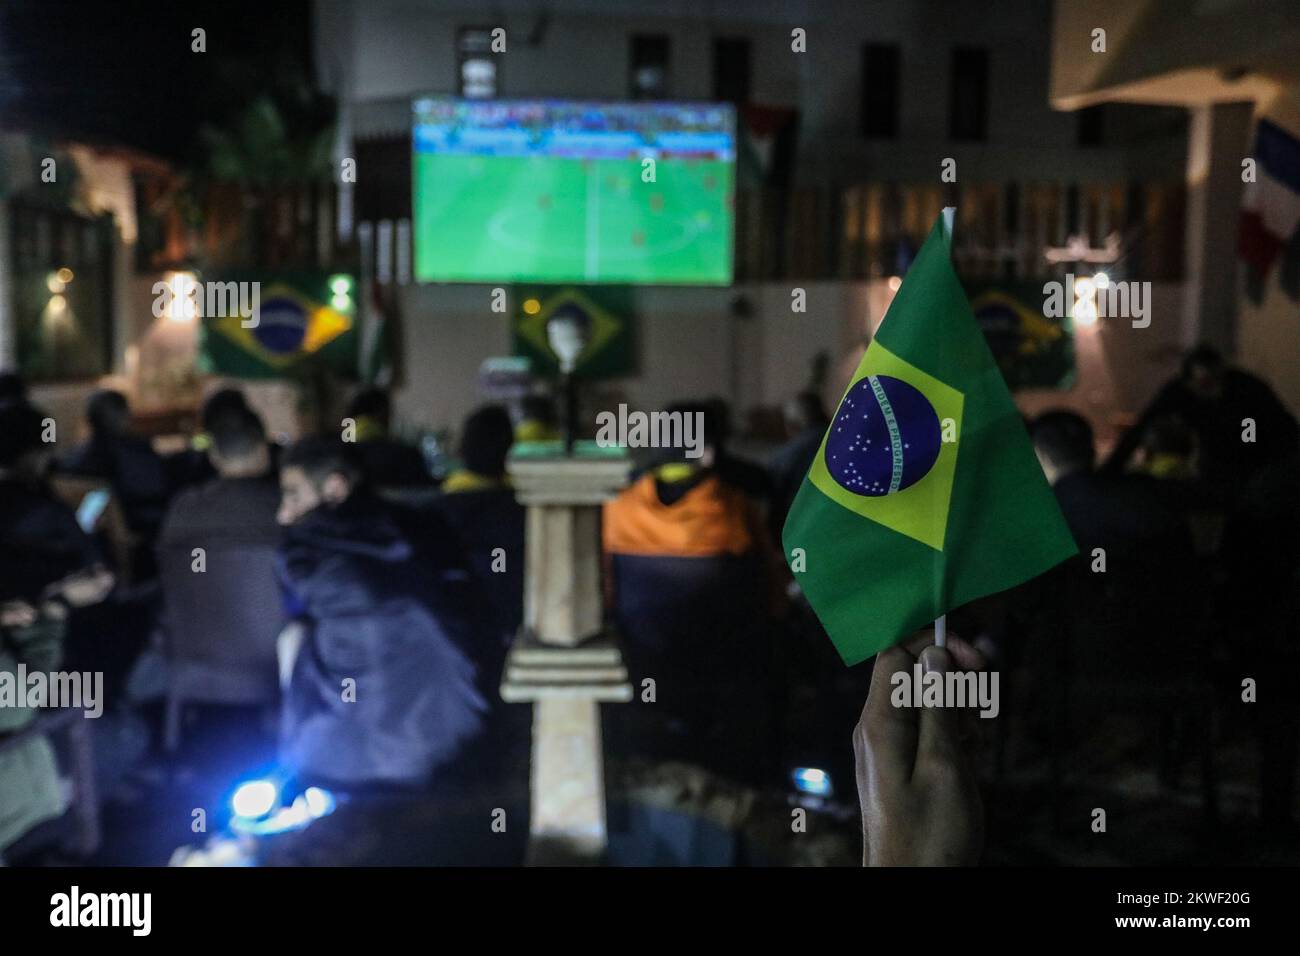 Brazilian Ambassador to Palestine watch the Brazil national team match against Switzerland in 2022 World Cup in Qatar,i n Gaza Strip, Nov 28, 2022. Stock Photo